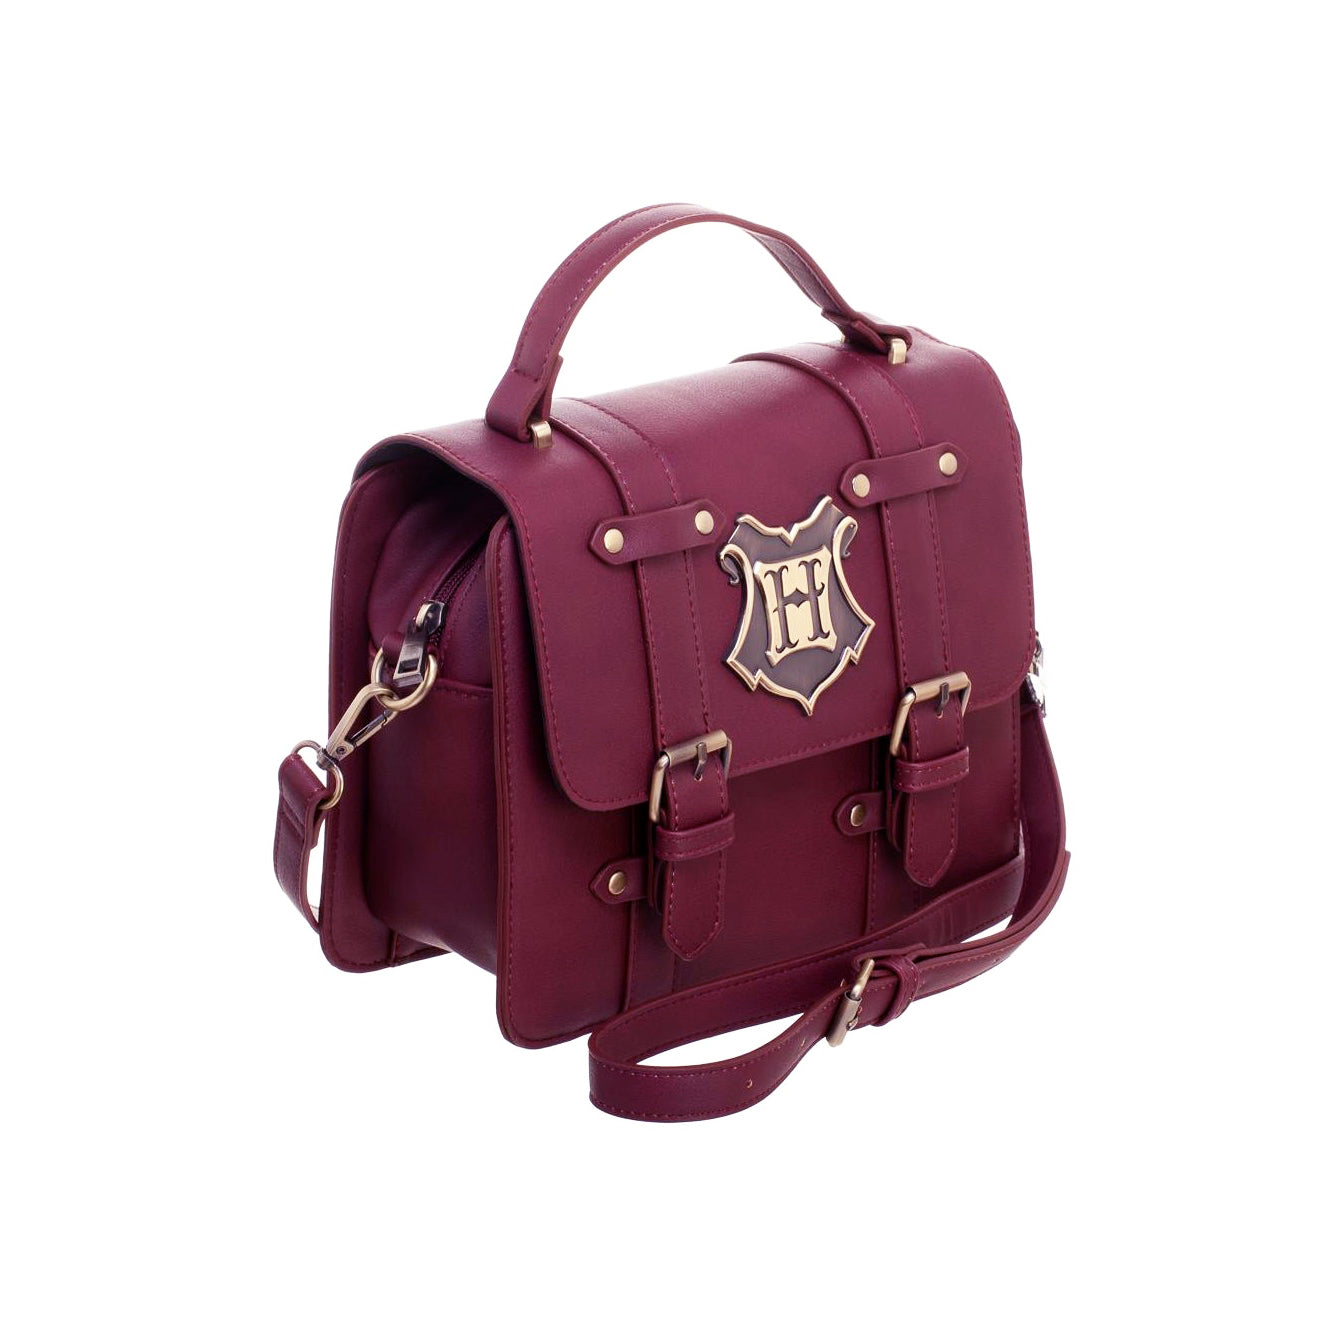 Hogwarts Satchel Handbag